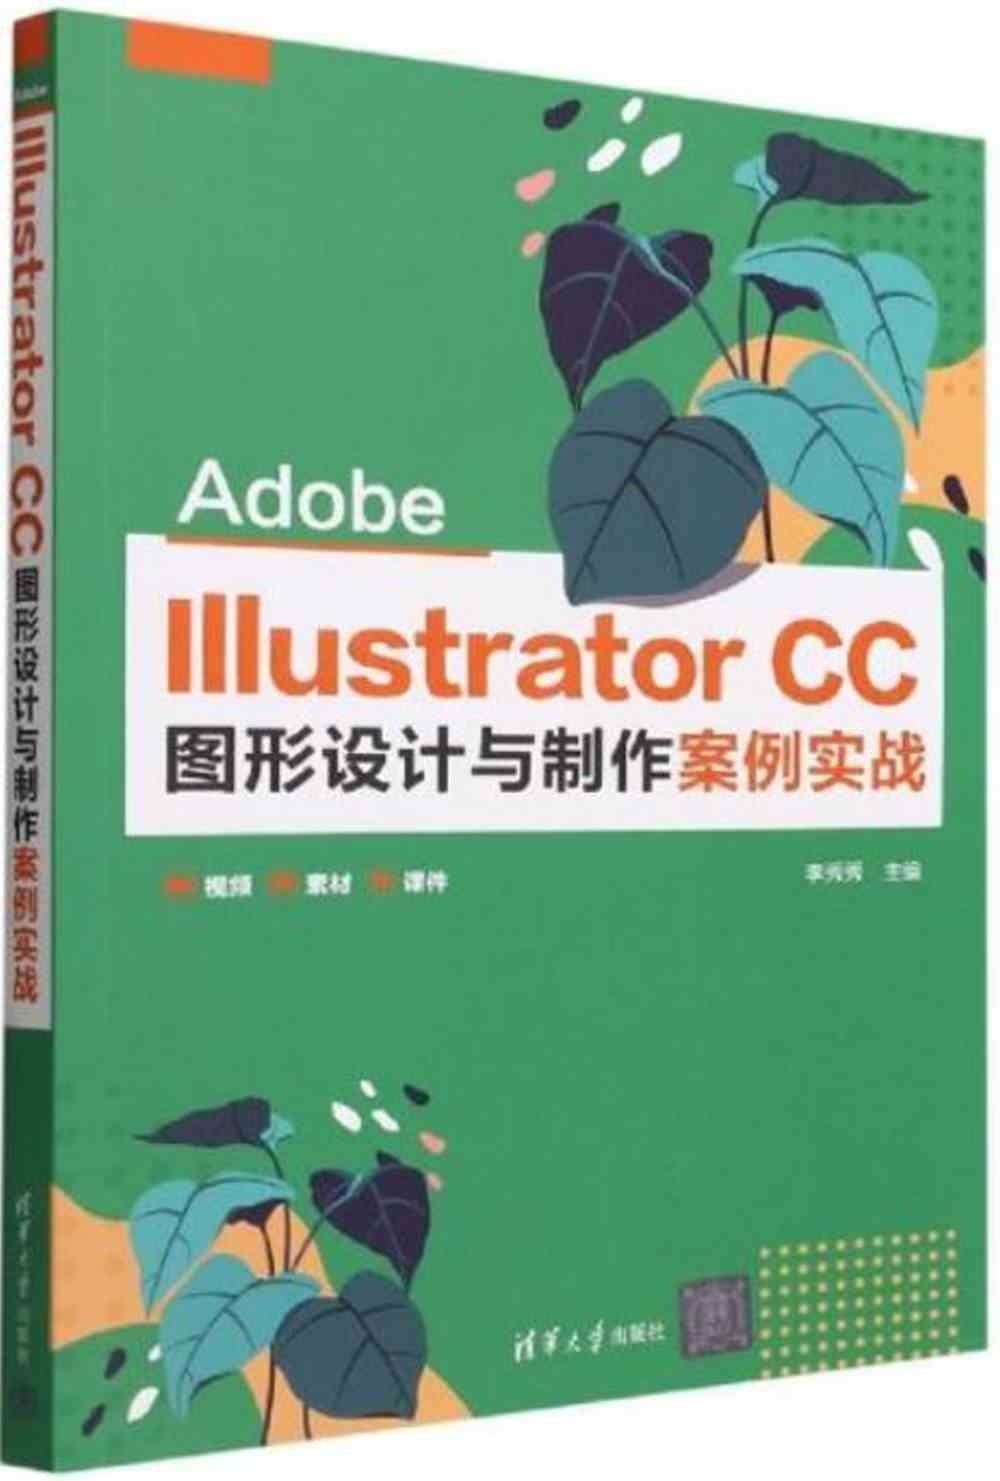 Adobe Illustrator CC圖形設計與製作案例實戰